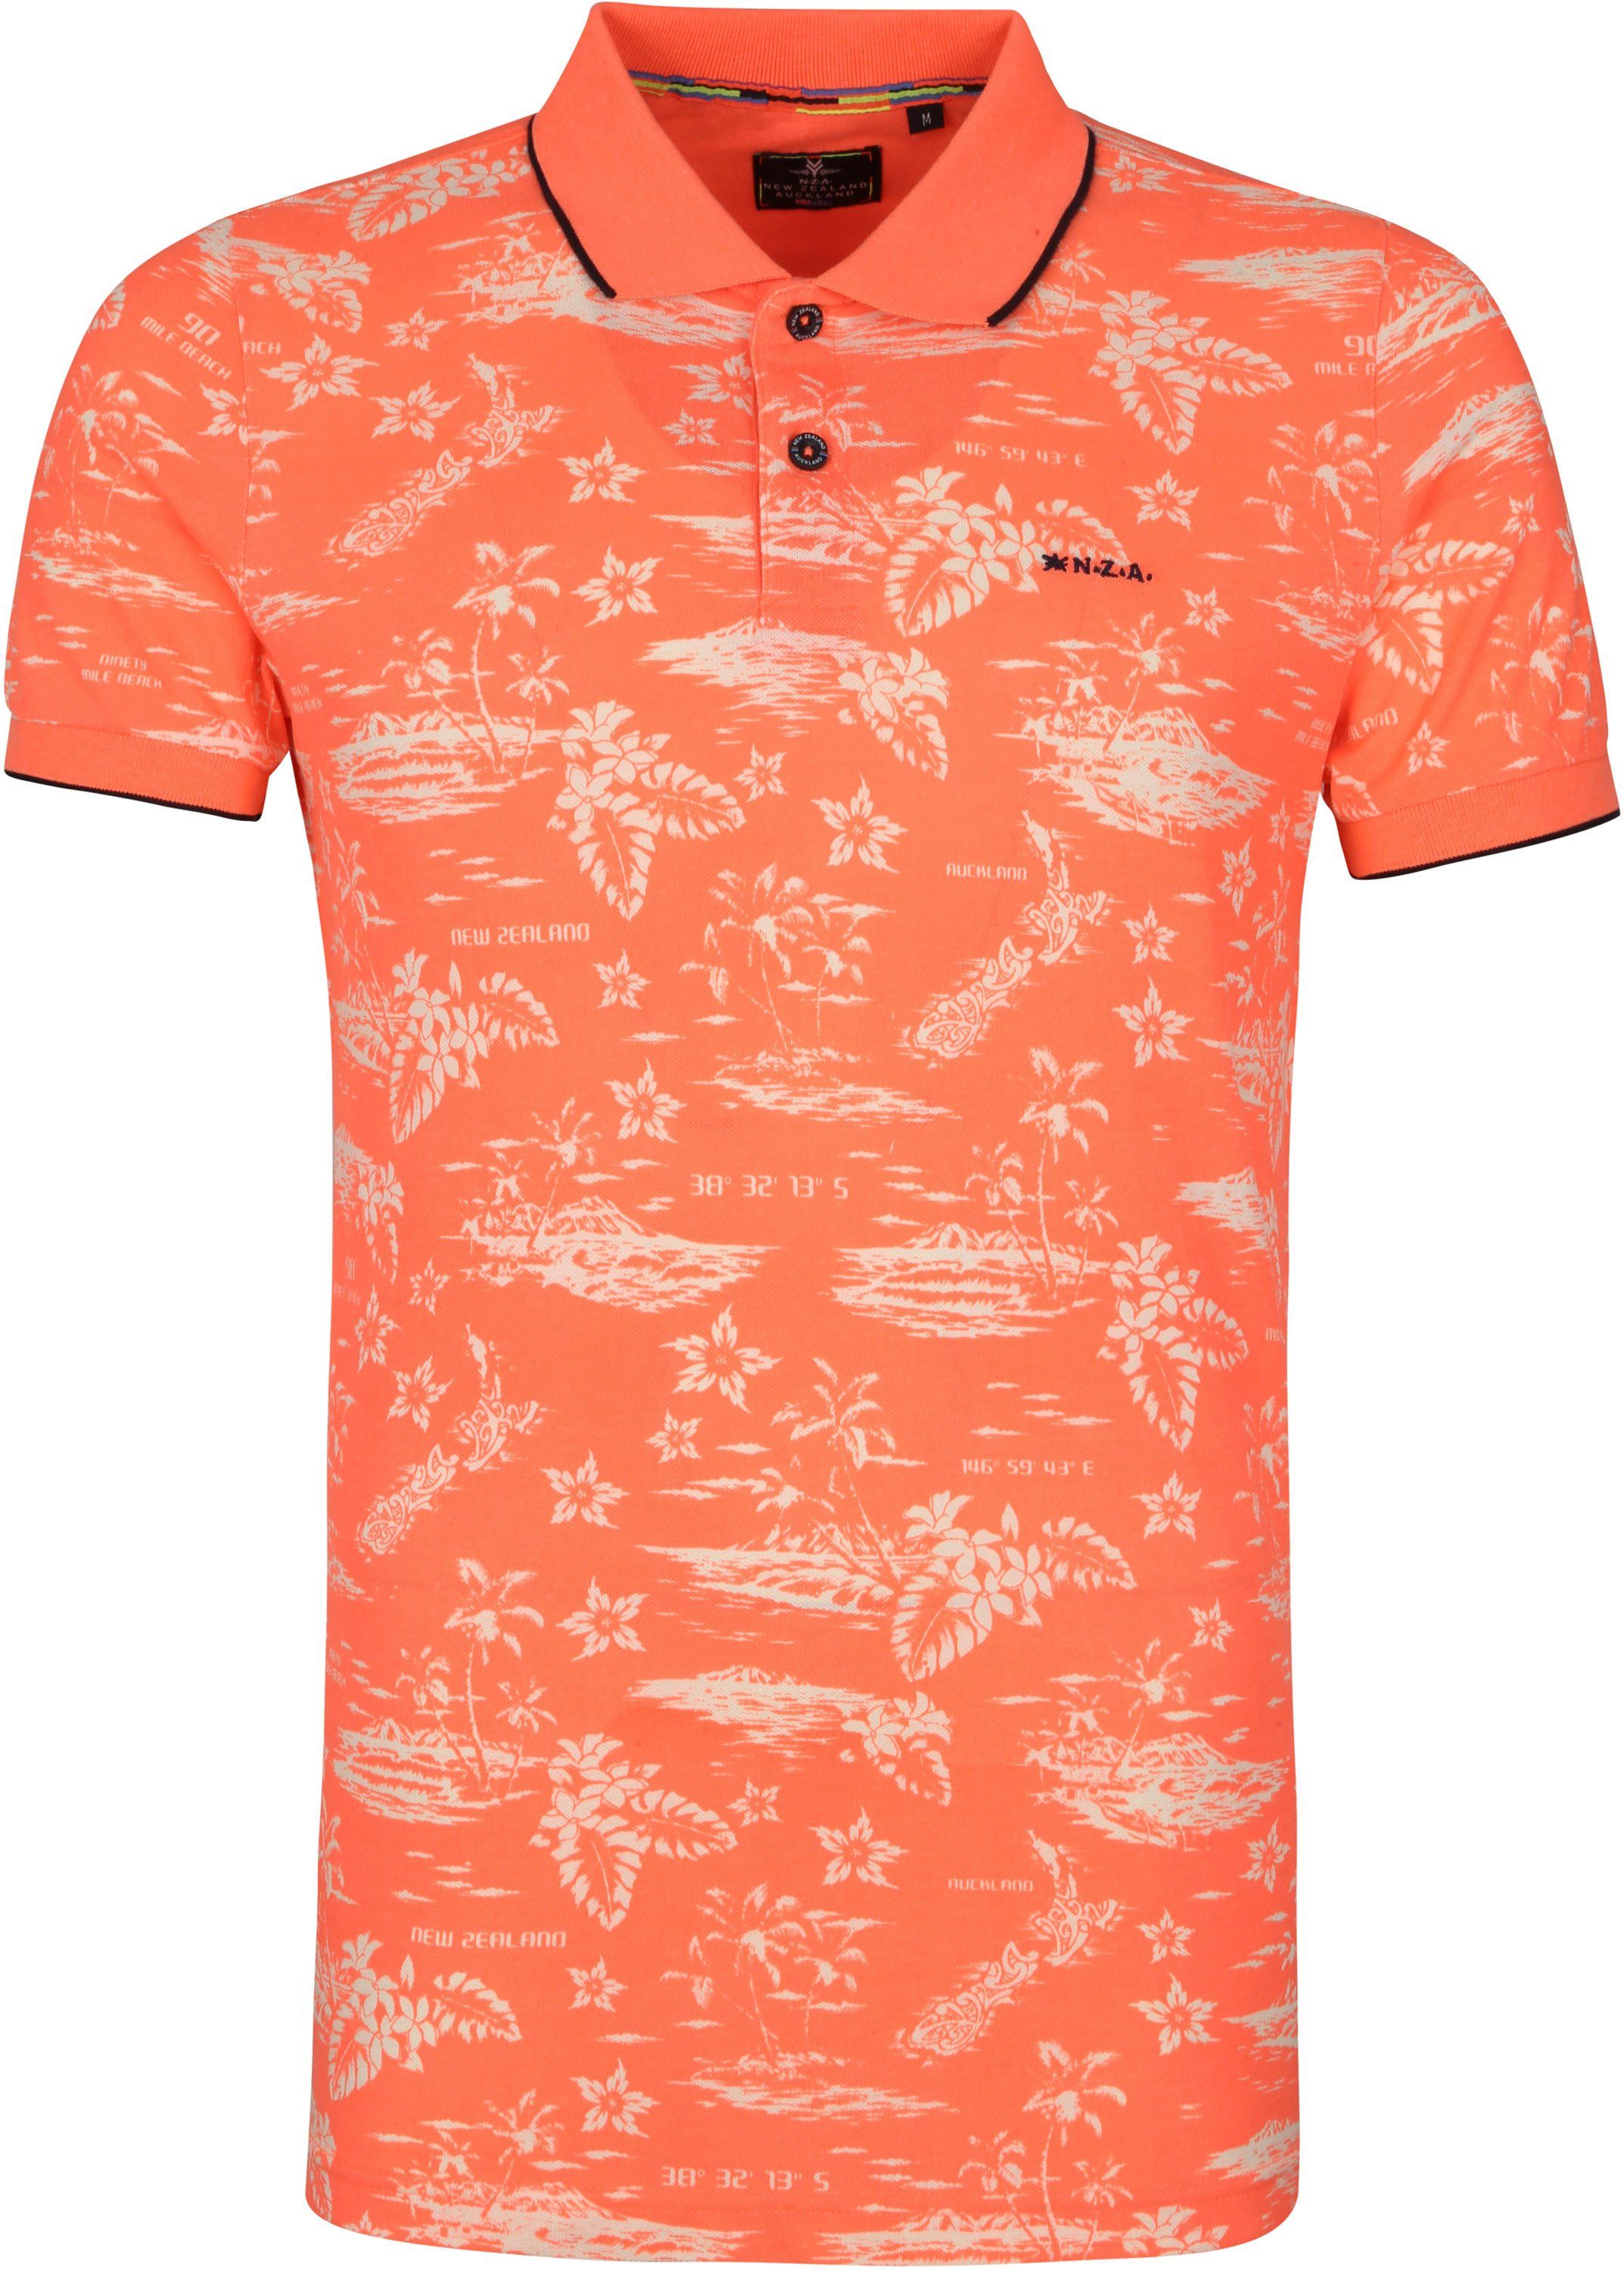 New Zealand Auckland - Nza polo shirt loch maree orange size l